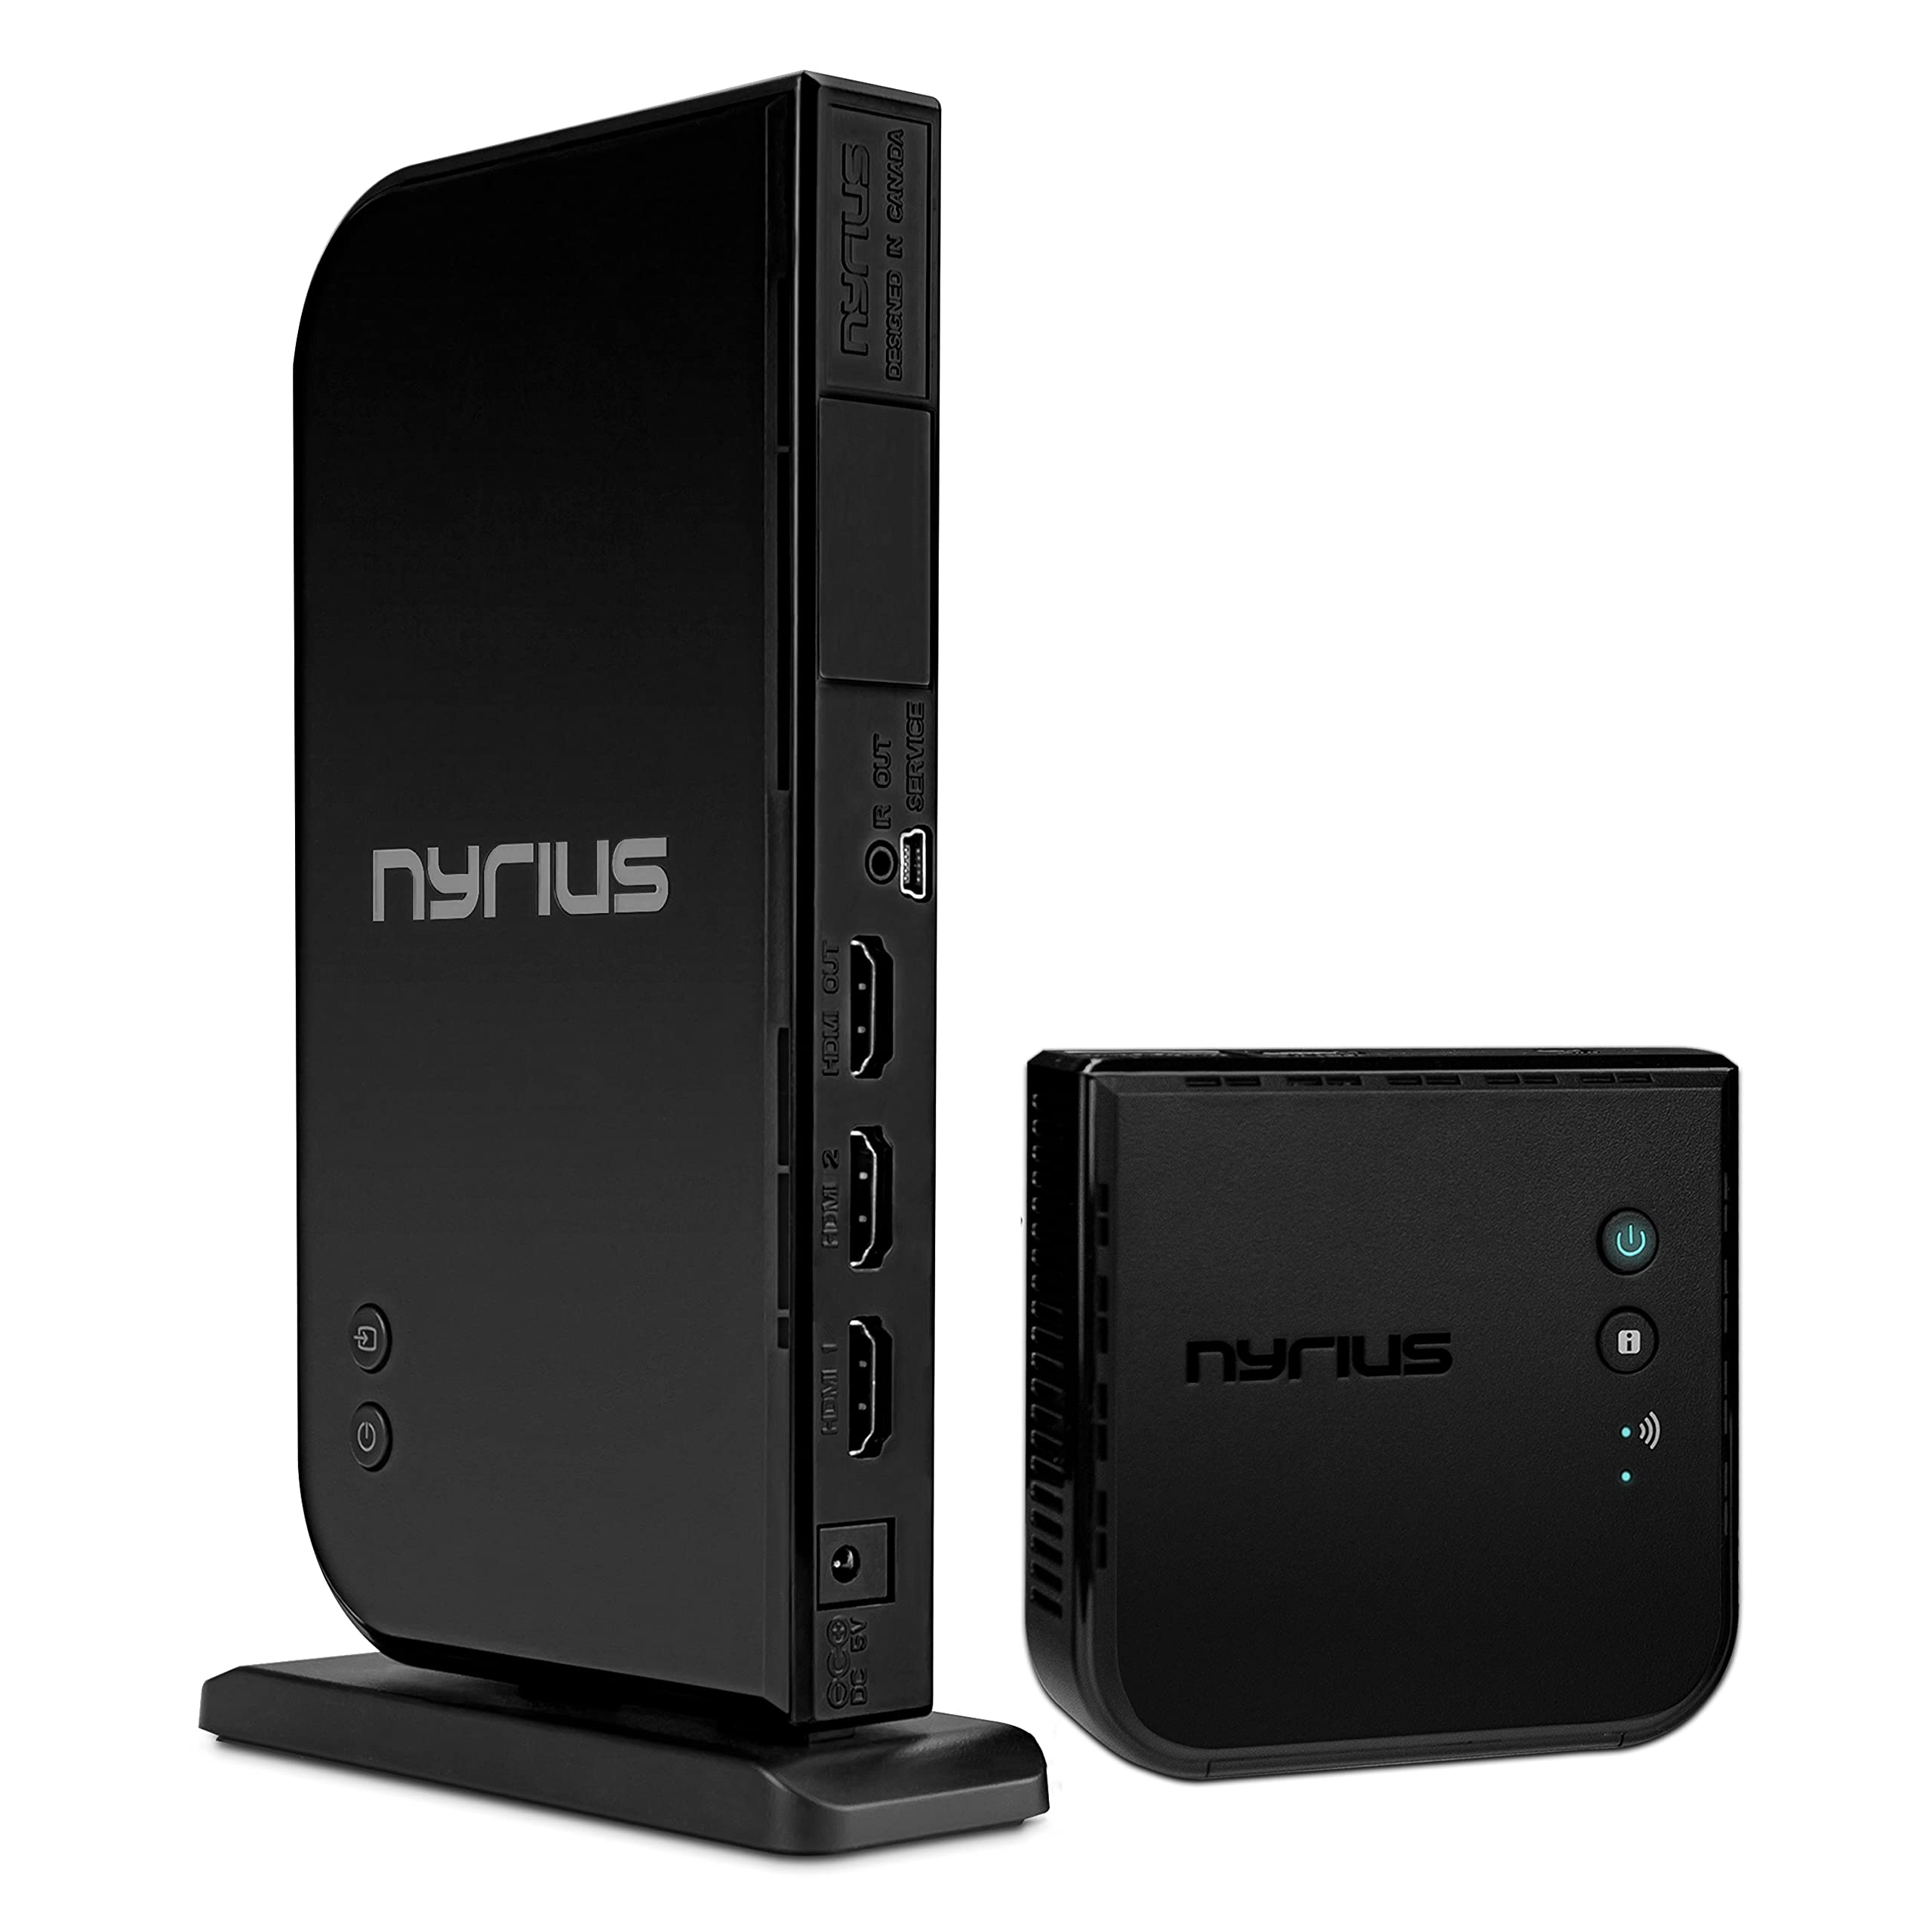  Nyrius Aries Home+ 无线 HDMI 2X 输入发射器和接收器，用于从有线电视盒、卫星、蓝光、DVD、PS4、PS3、笔记本电脑、PC 传输高清 1080p 3D 视频和数字音频 (NAVS502)...